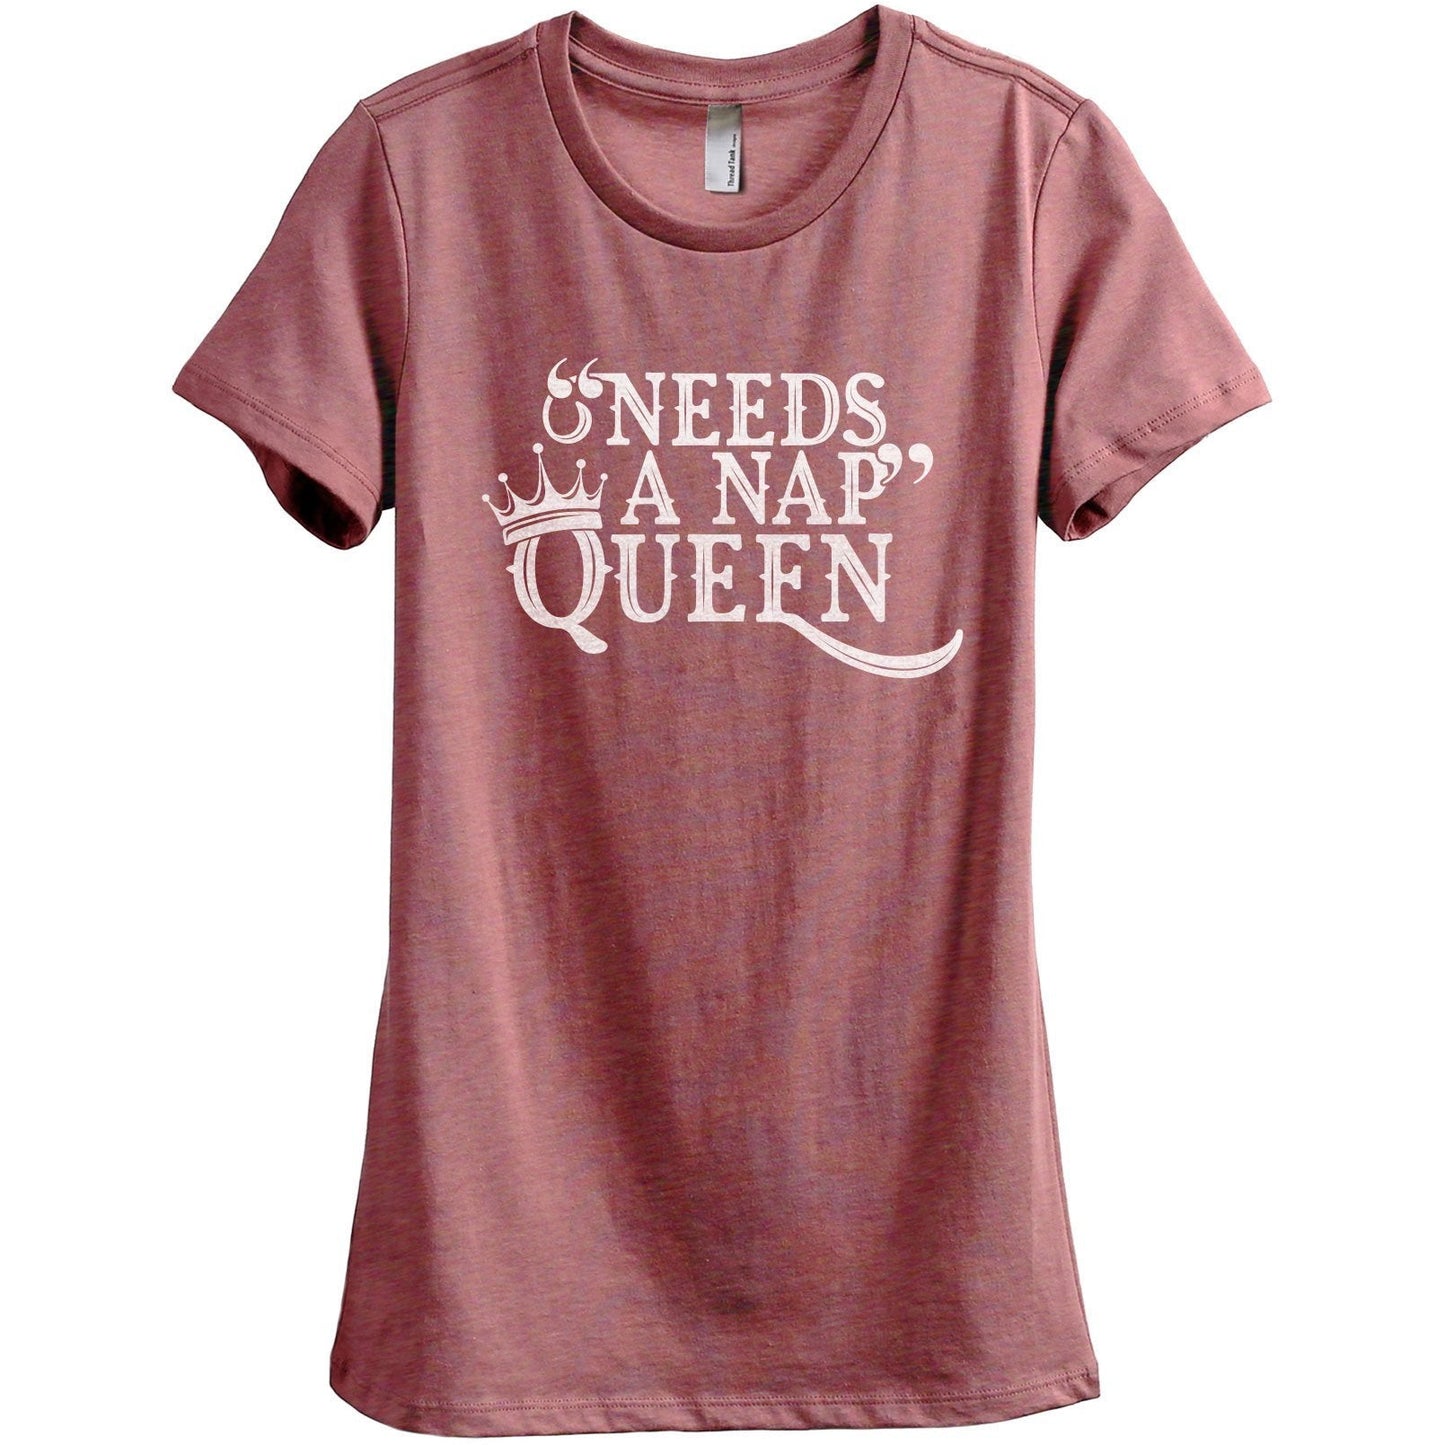 Needs A Nap Queen Women's Relaxed Crew T-Shirt Heather Rouge Shirt Image